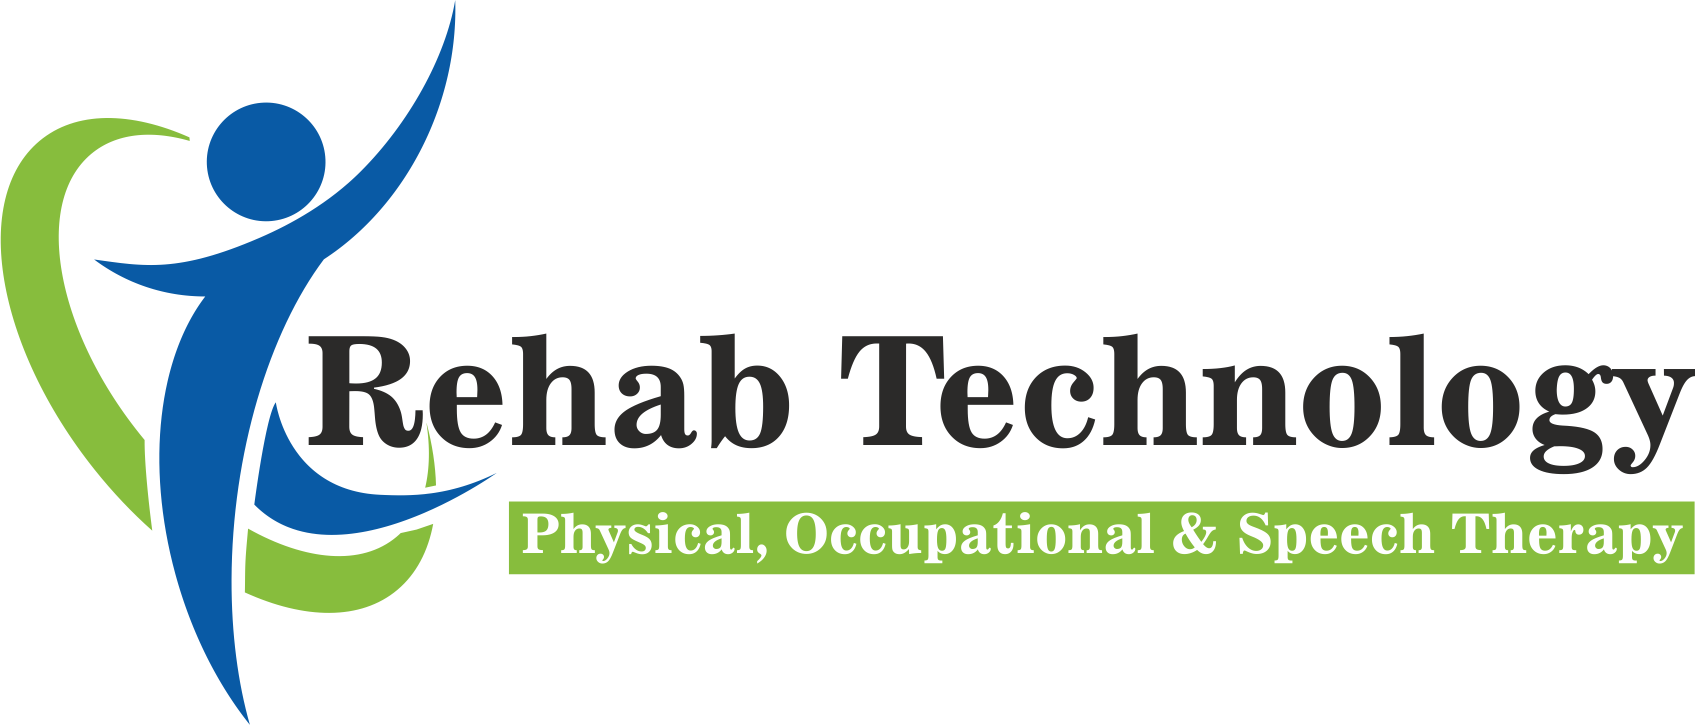 Rehab Technology, Llc - Graphic Design (1695x725)